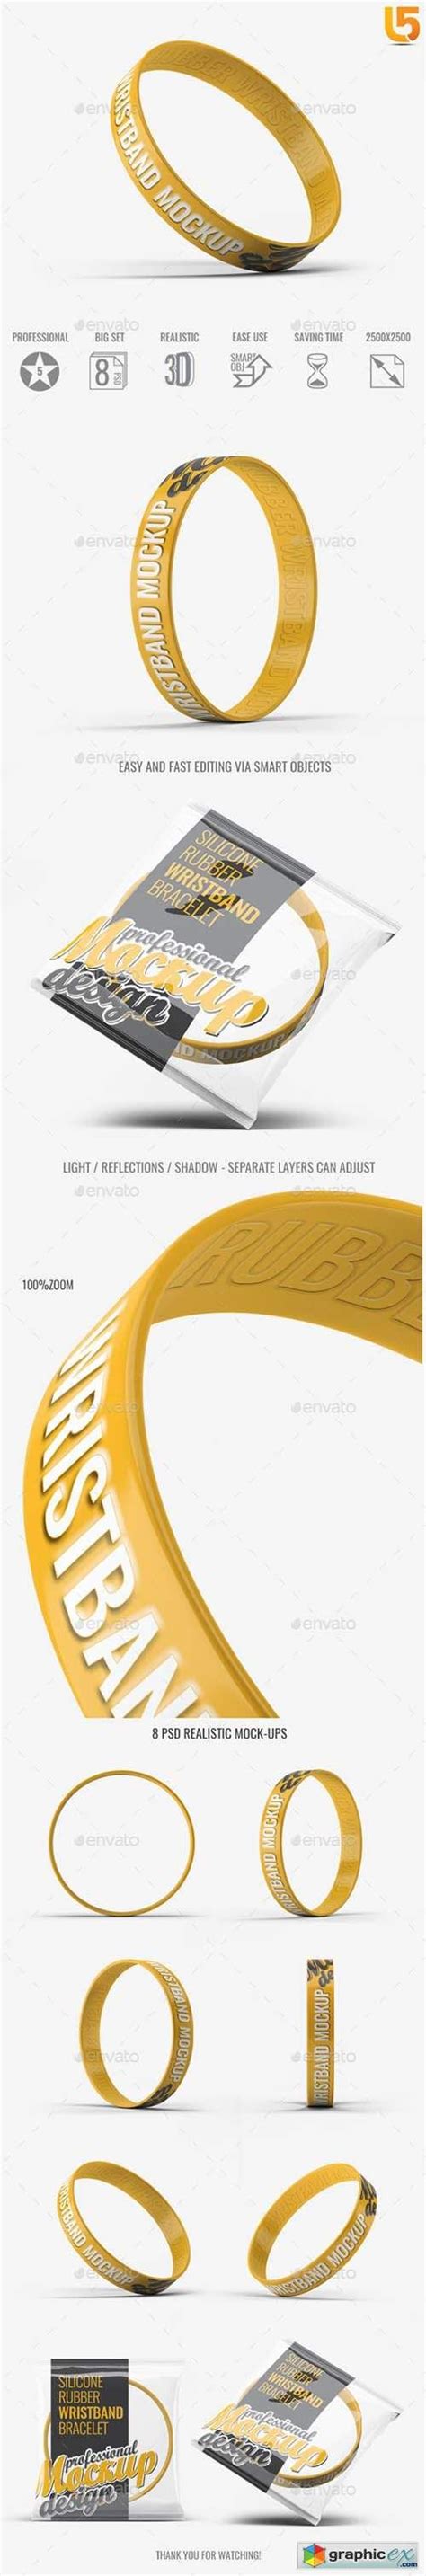 silicone rubber wristband bracelet mock  wristband design wristband wristband bracelet